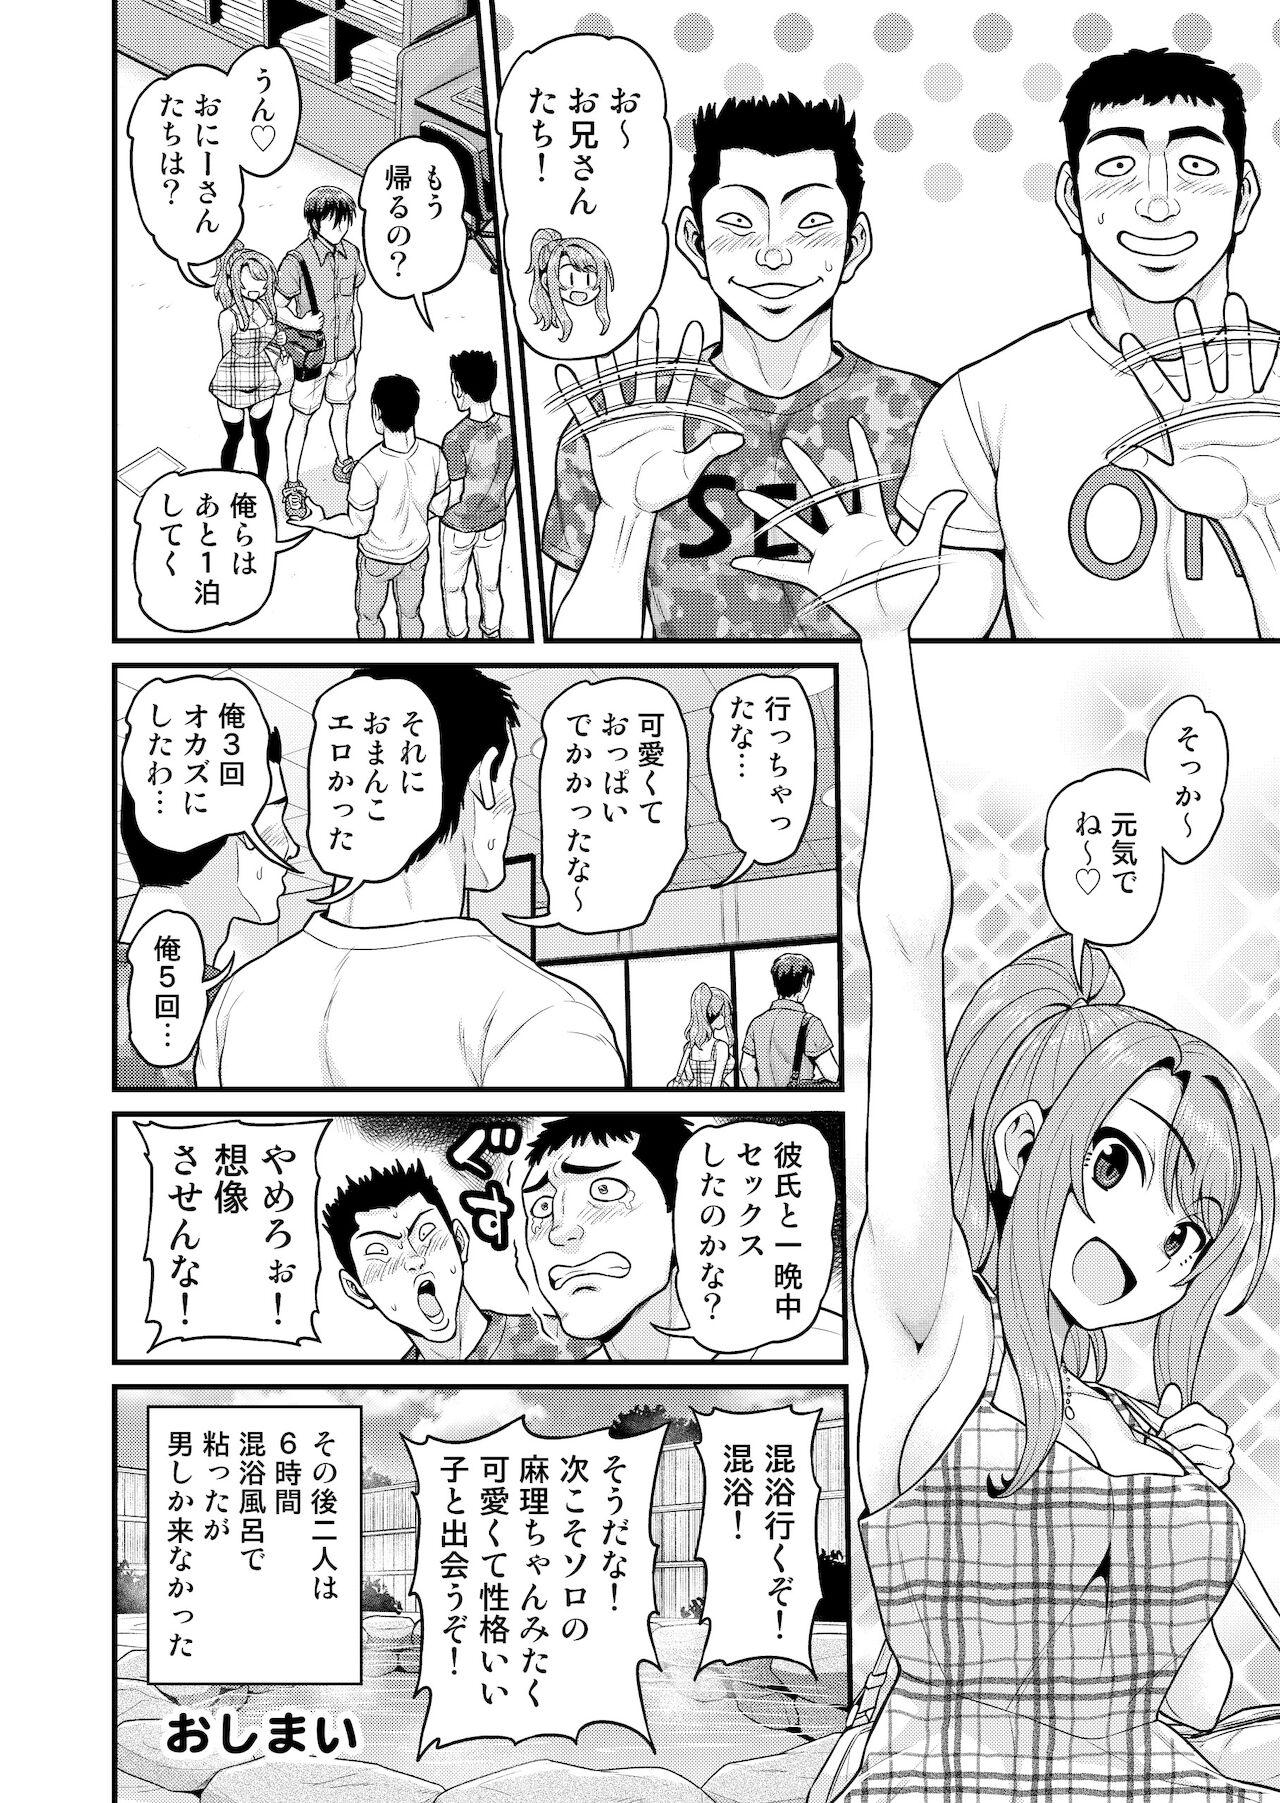 Petite Teenager ゲーム友達の女の子と温泉旅行でヤる話 - Original Male - Page 51